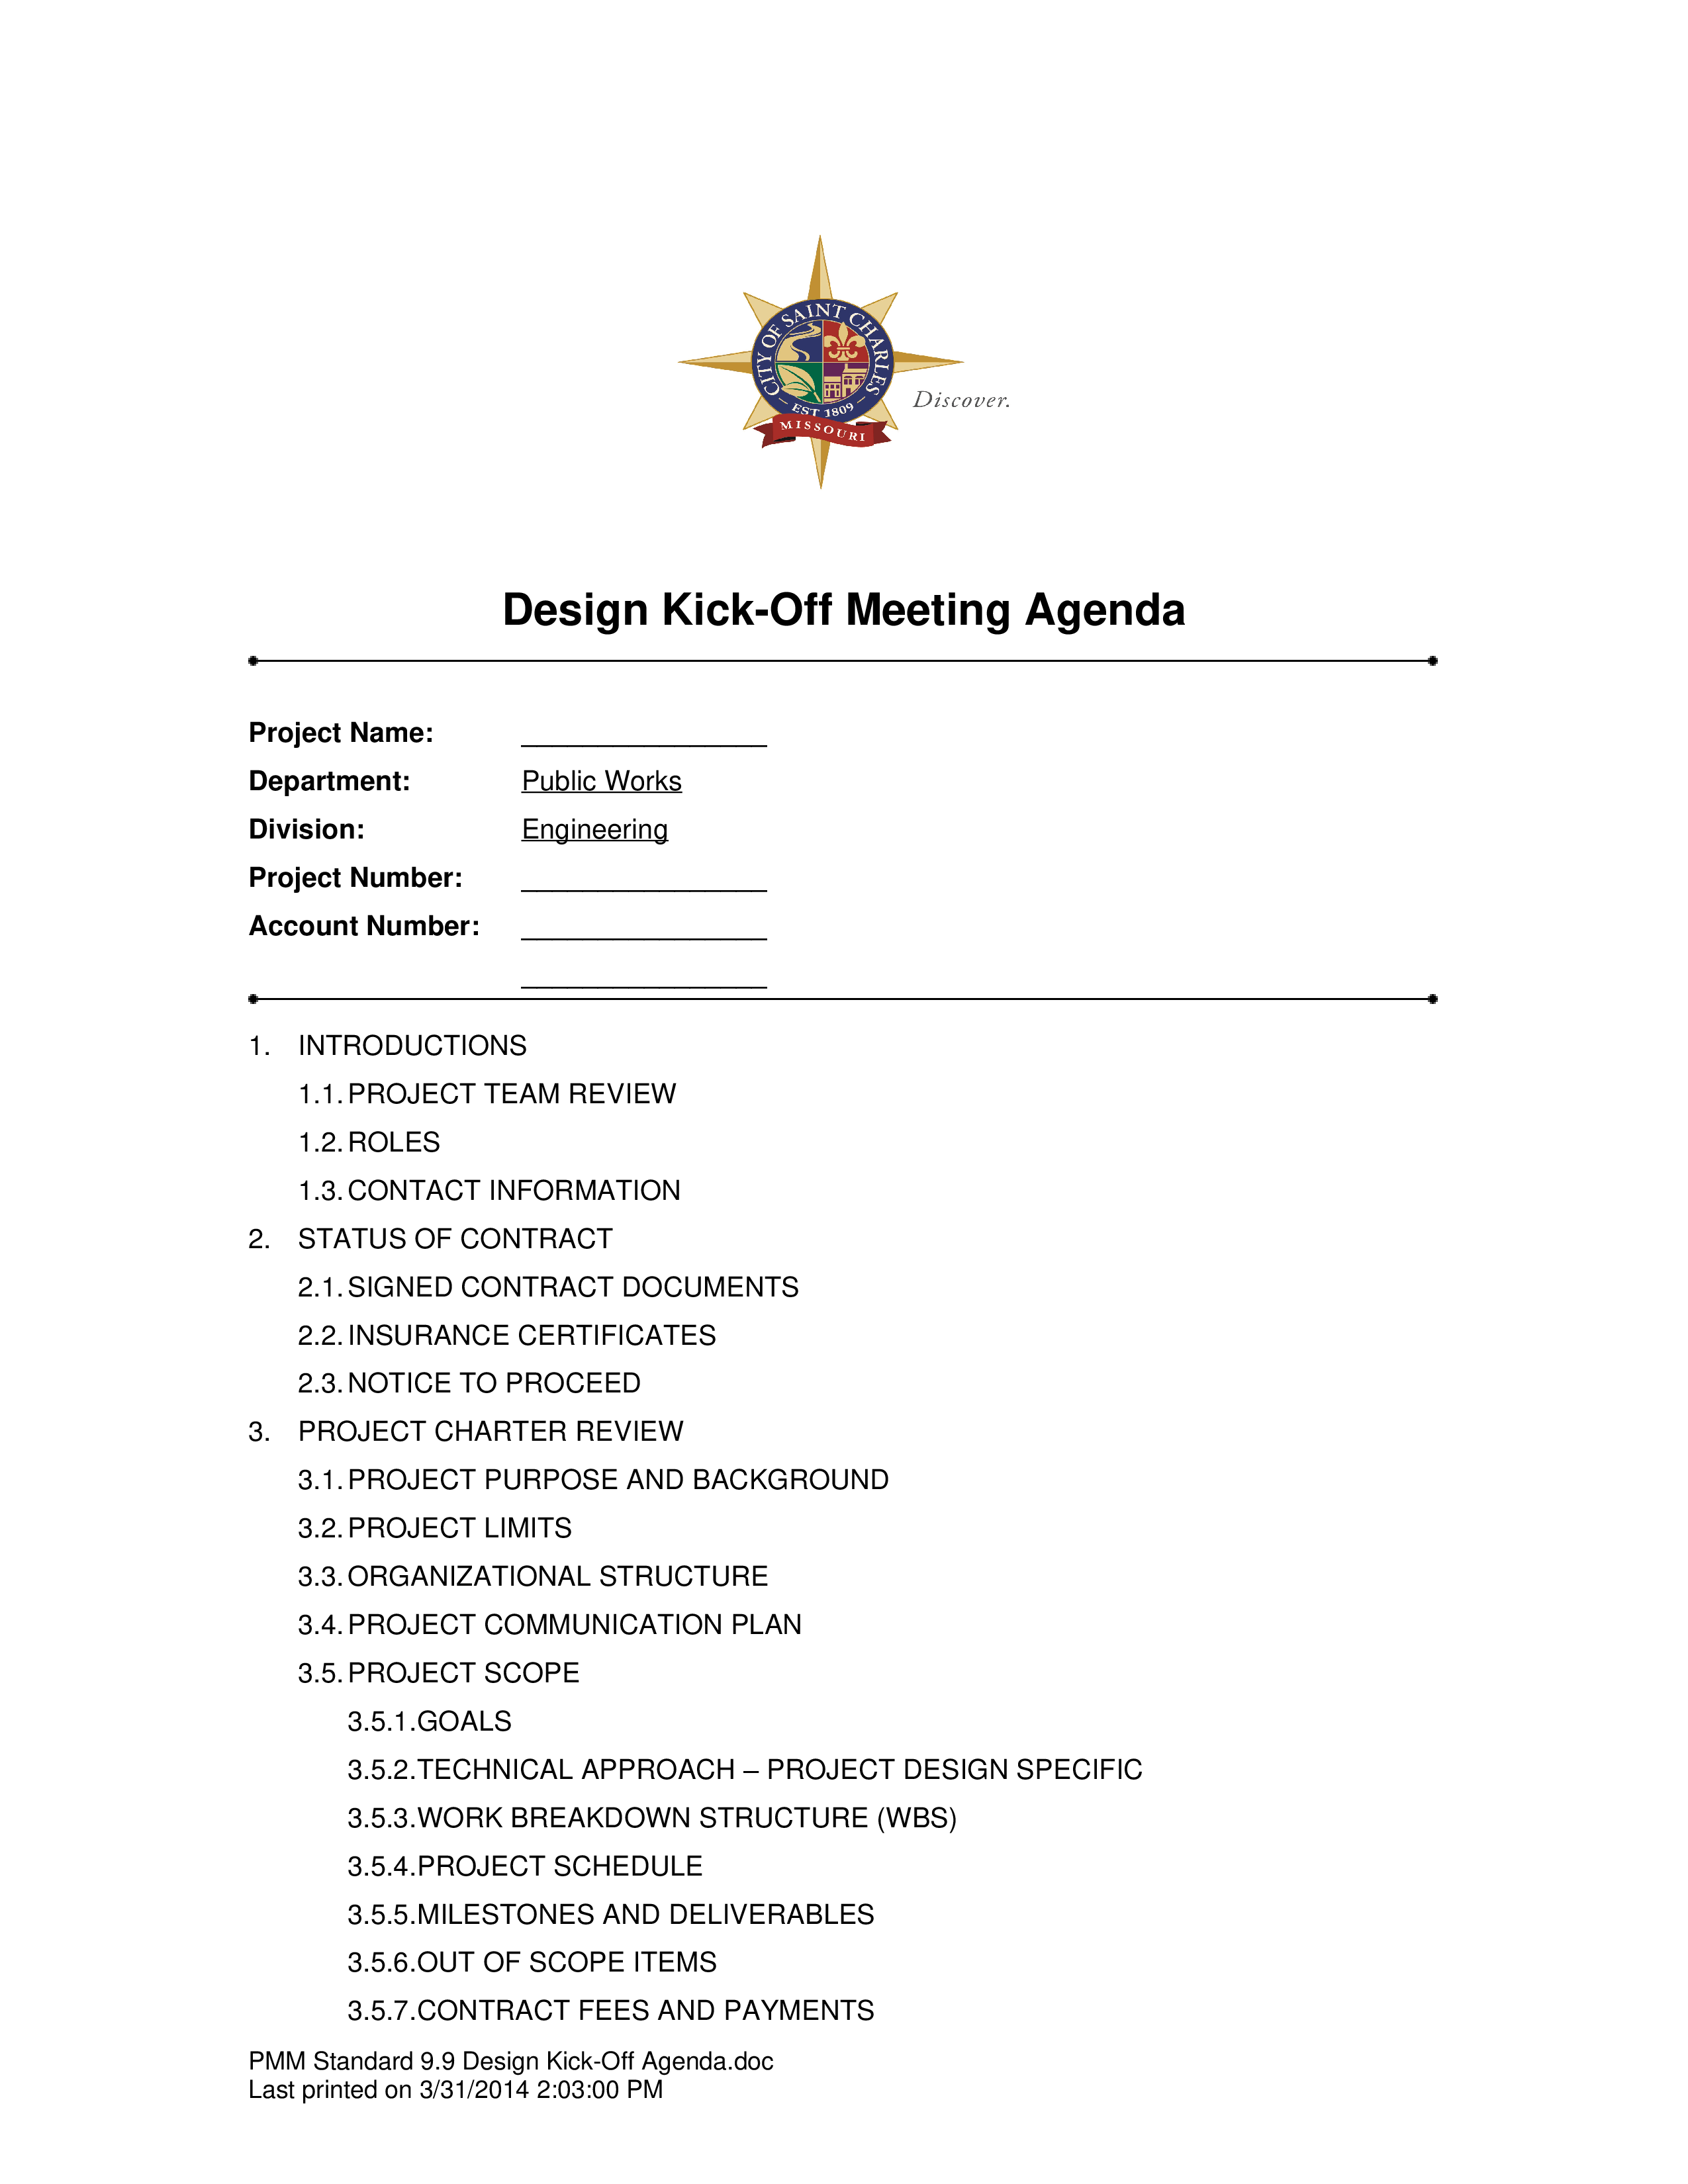 Kick Off Design Meeting Agenda main image